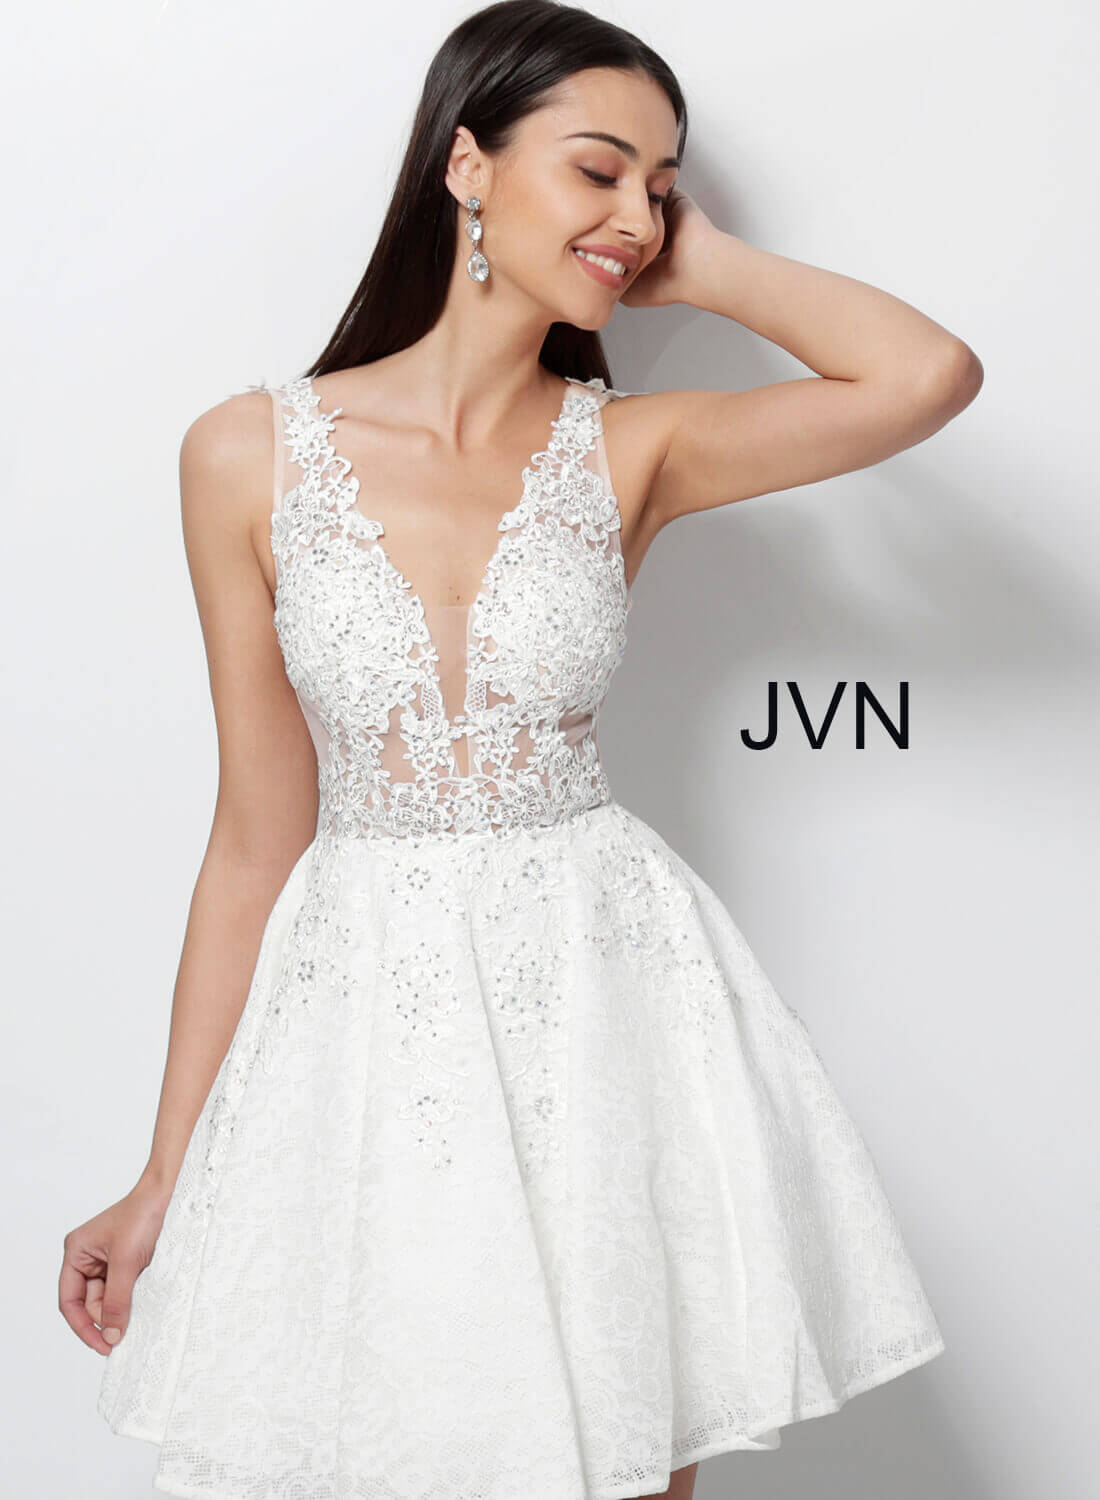 JVN45264 Dress | White lace applique fit and flare short dress